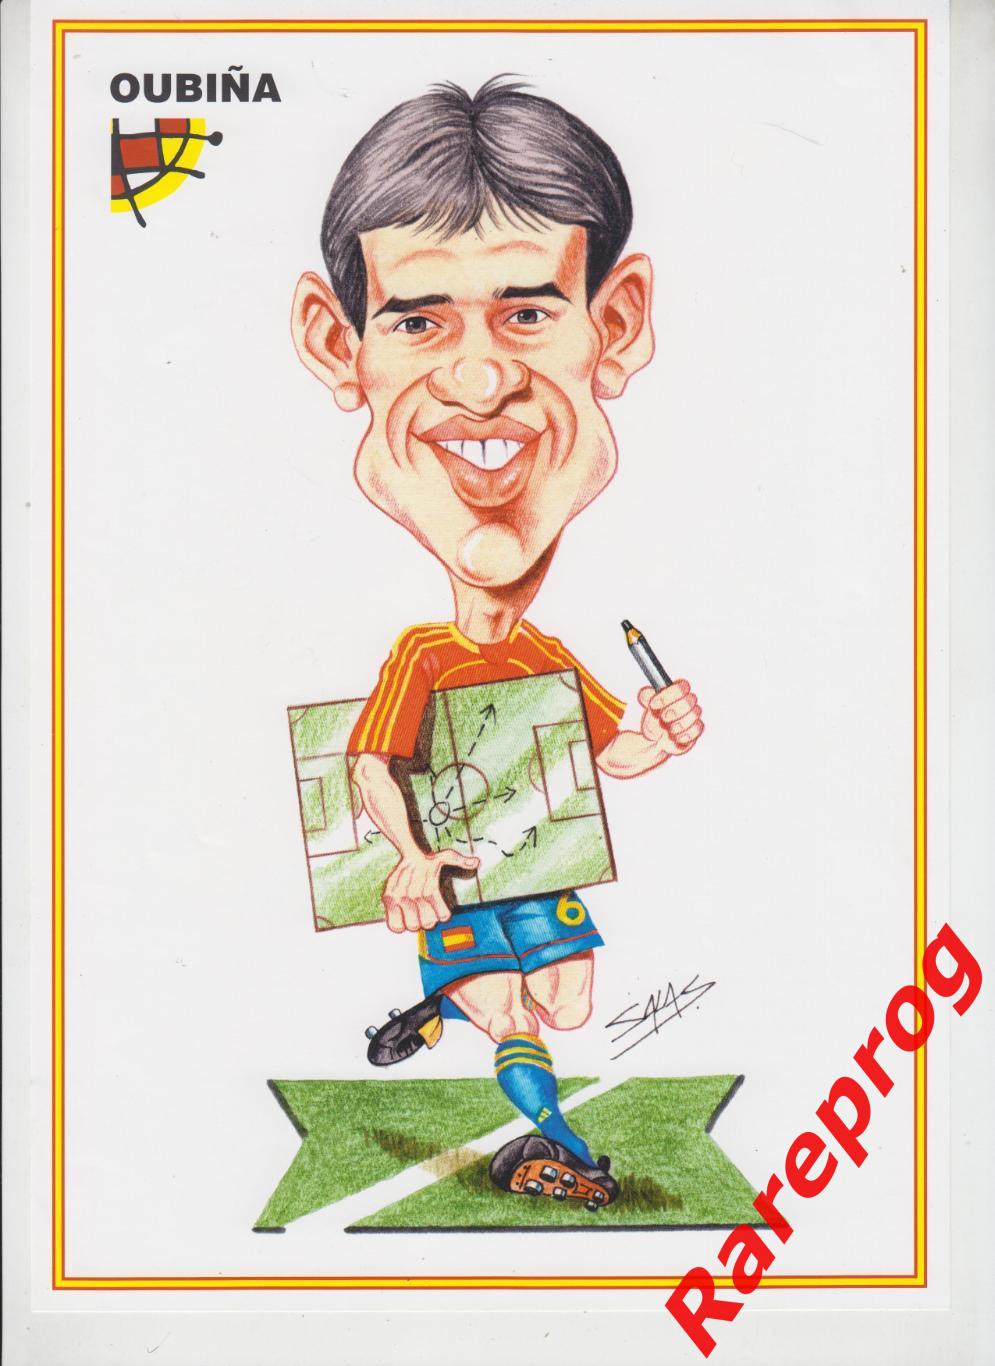 журнал Футбол RFEF Испания № 89 сентябрь 2006 - постер Oubina 1